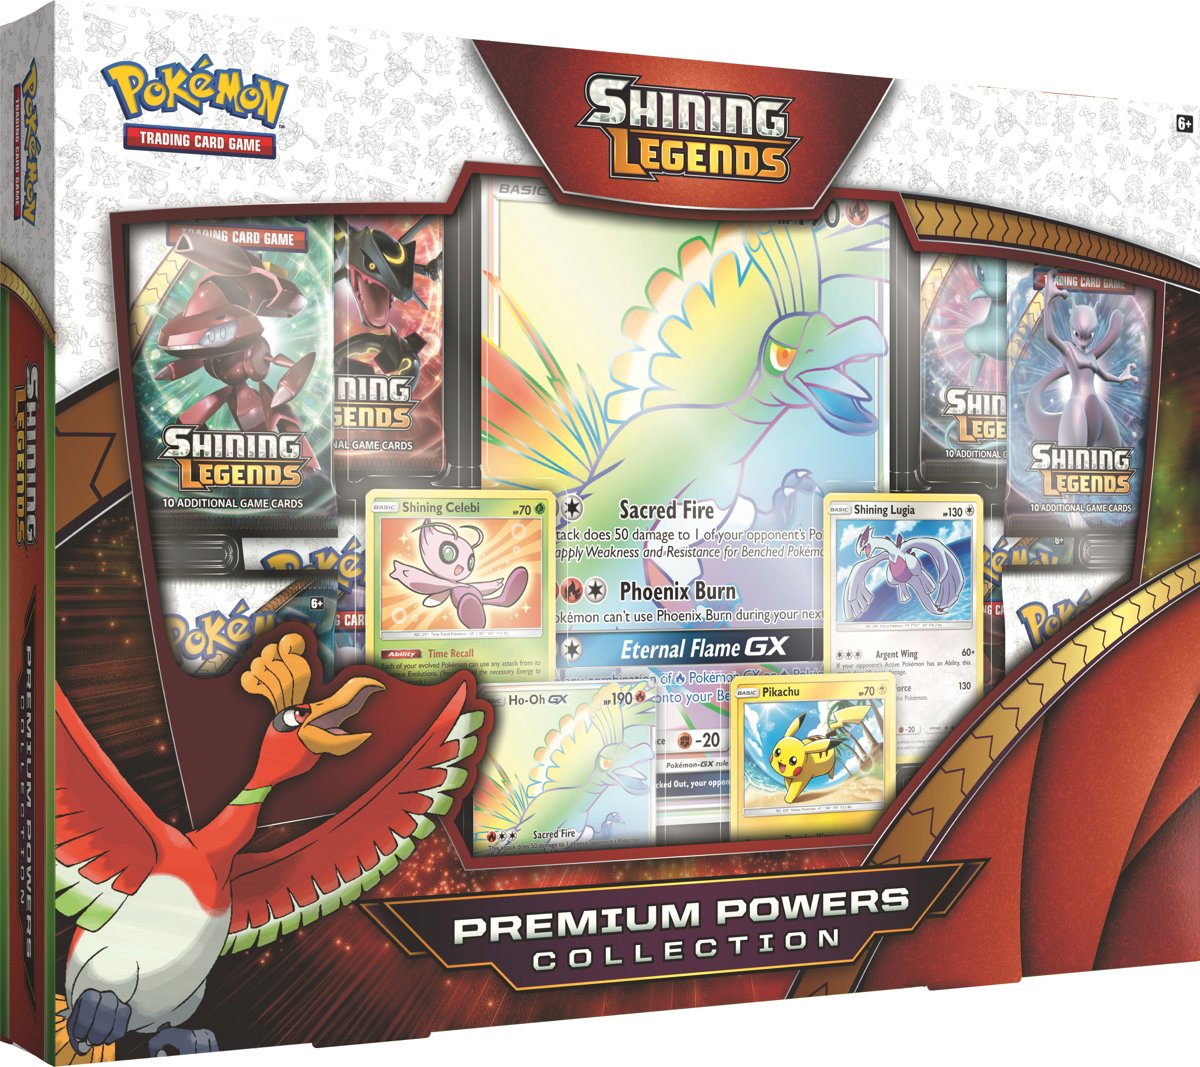 Pokemon Premium Collection Box: Shining Legends (Pokemon), The Pokemon Company